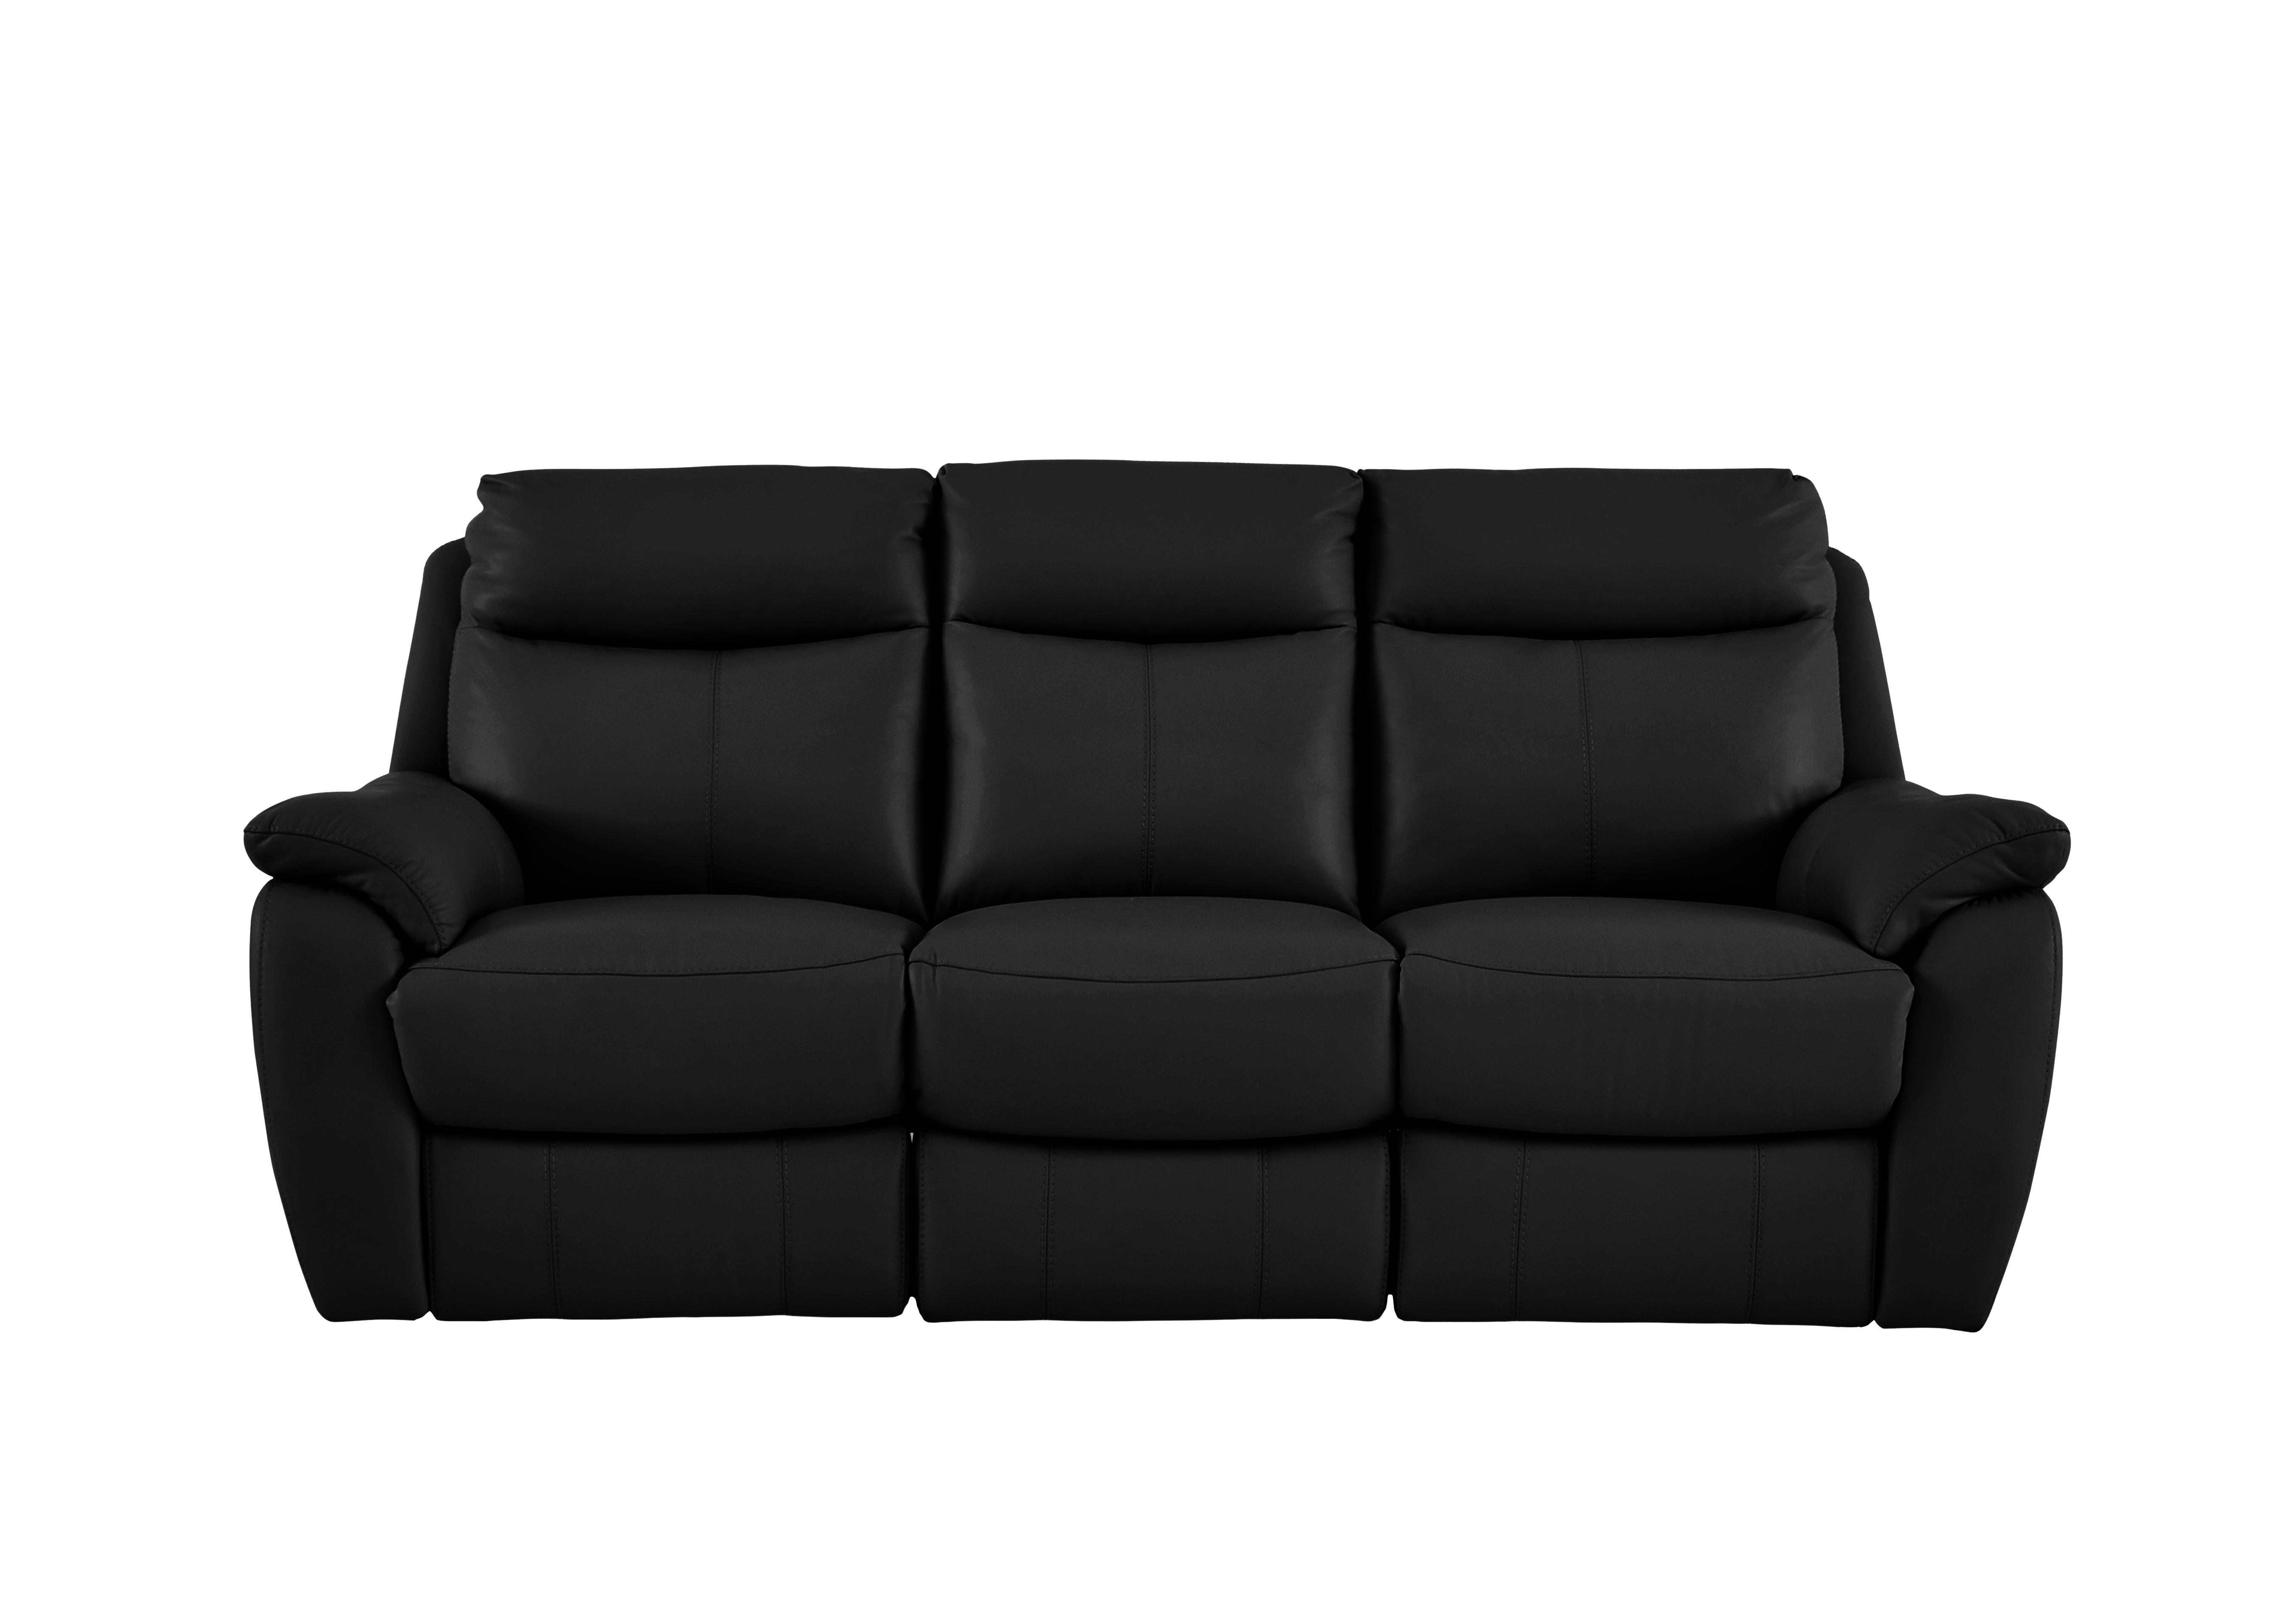 Snug 3 Seater Leather Sofa in Bv-3500 Classic Black on Furniture Village